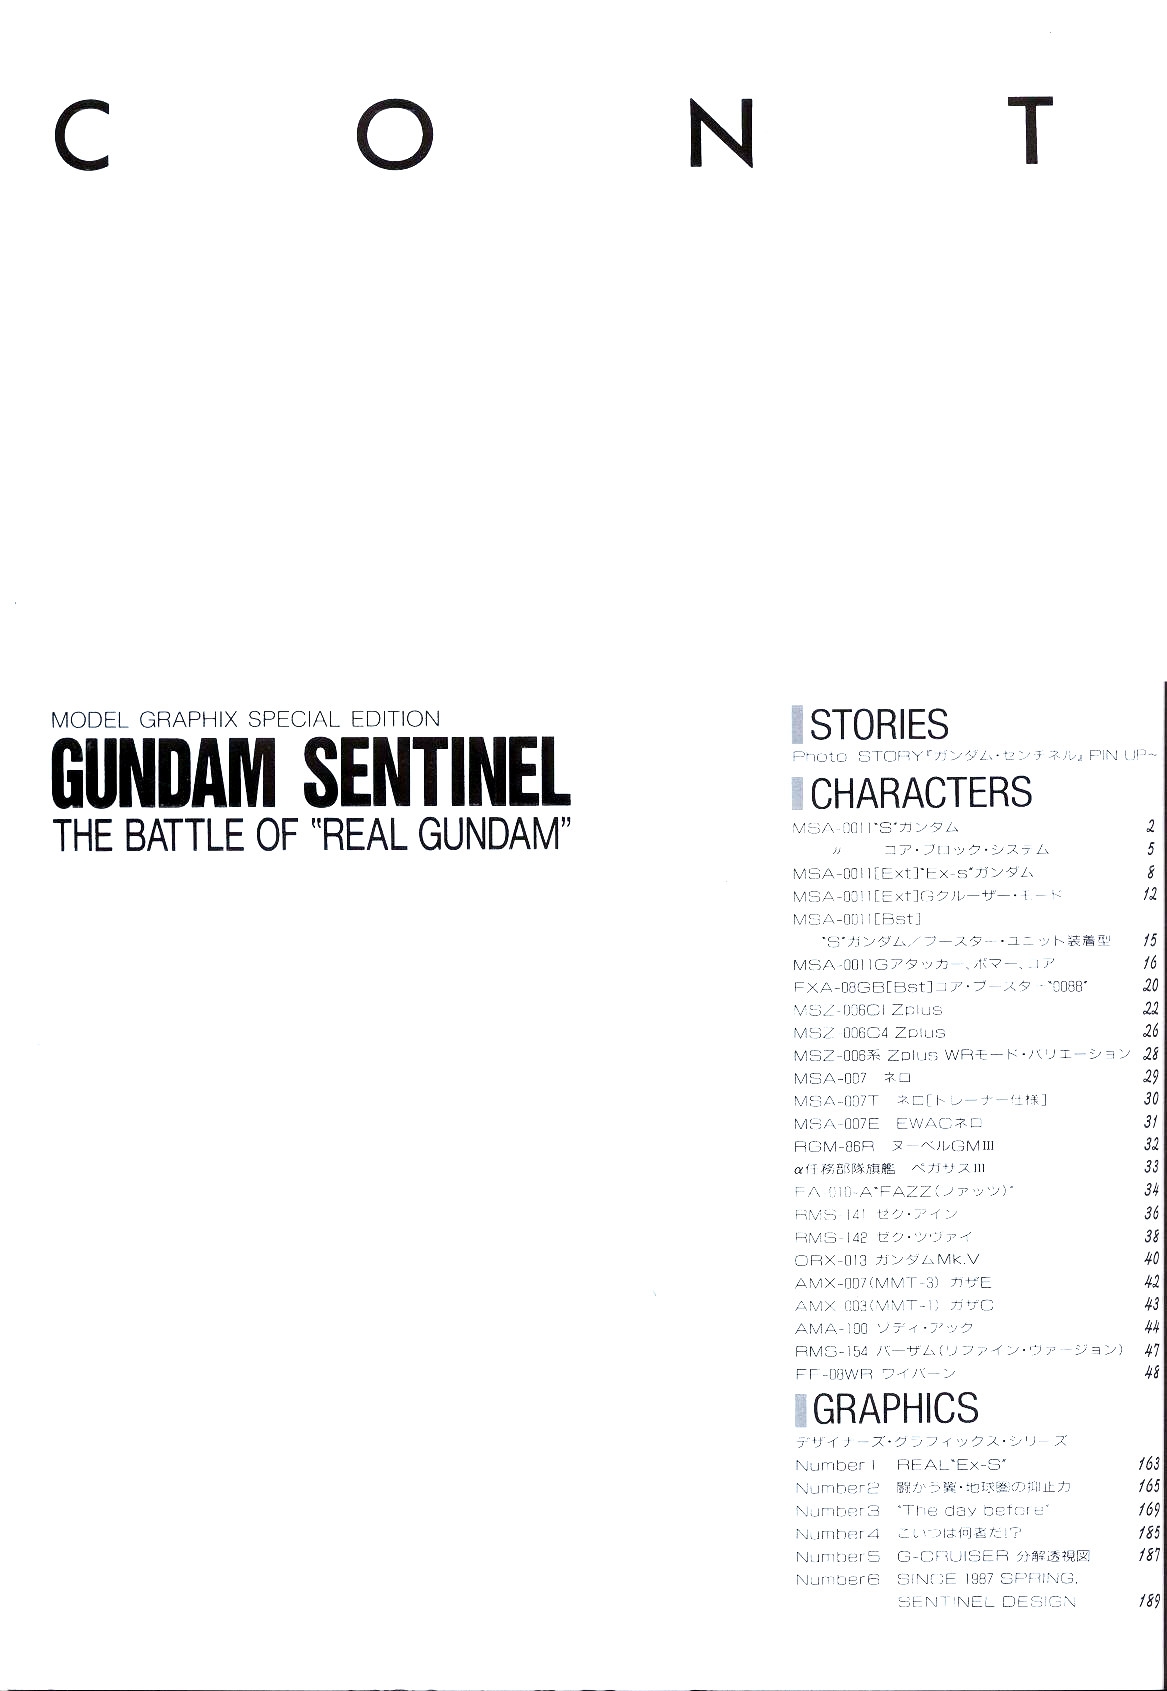 Model Graphix Special Edition - Gundam Wars III - Gundam Sentinel 3